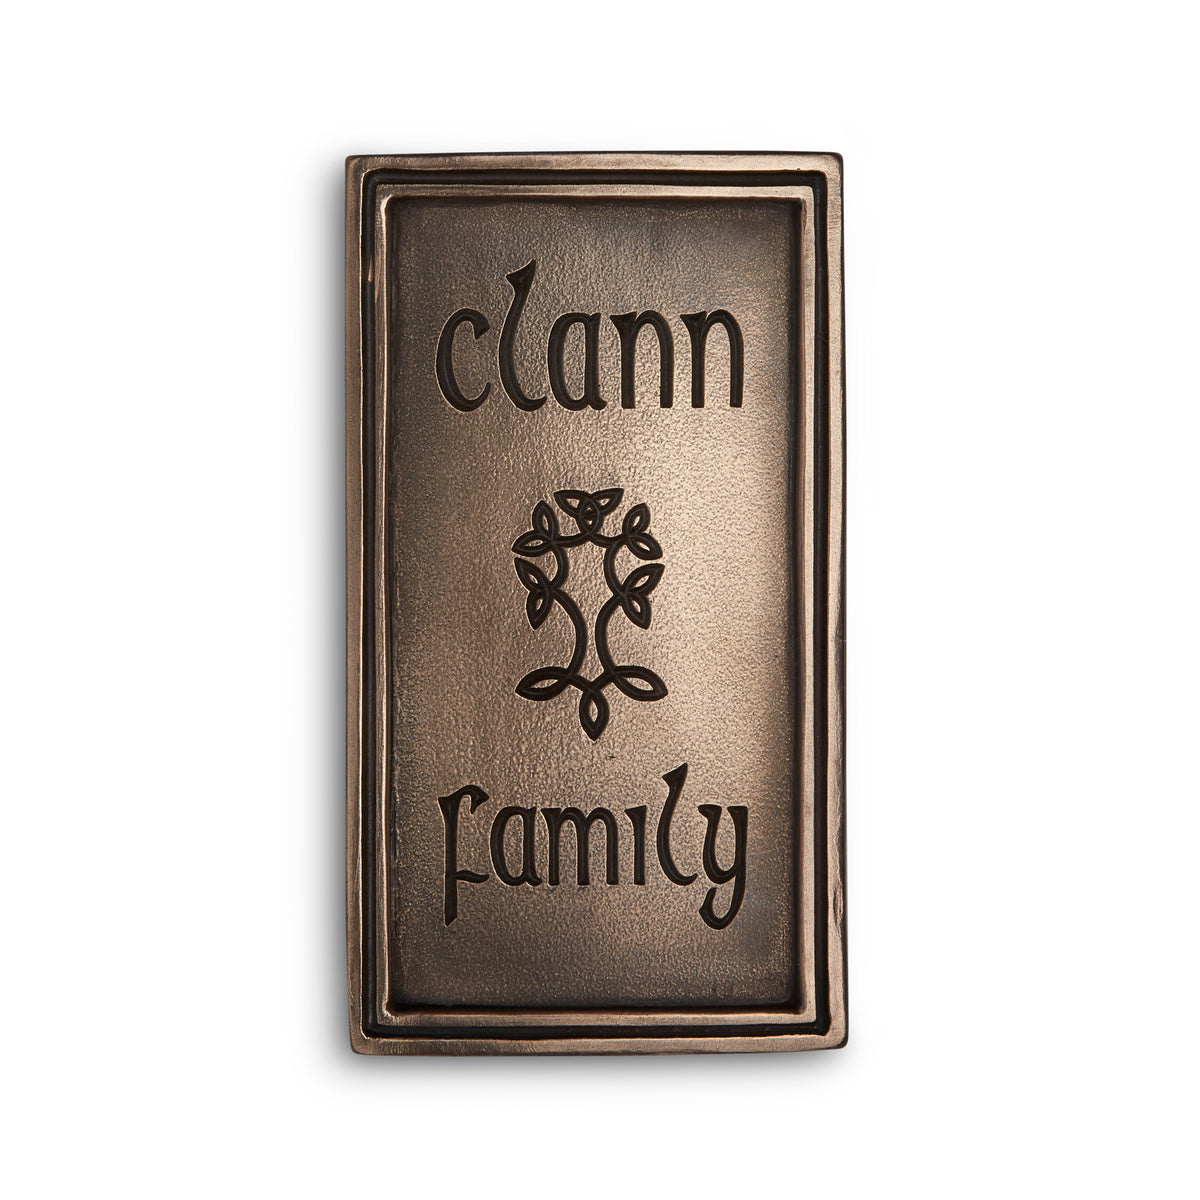 Clann Family Celtic Tree